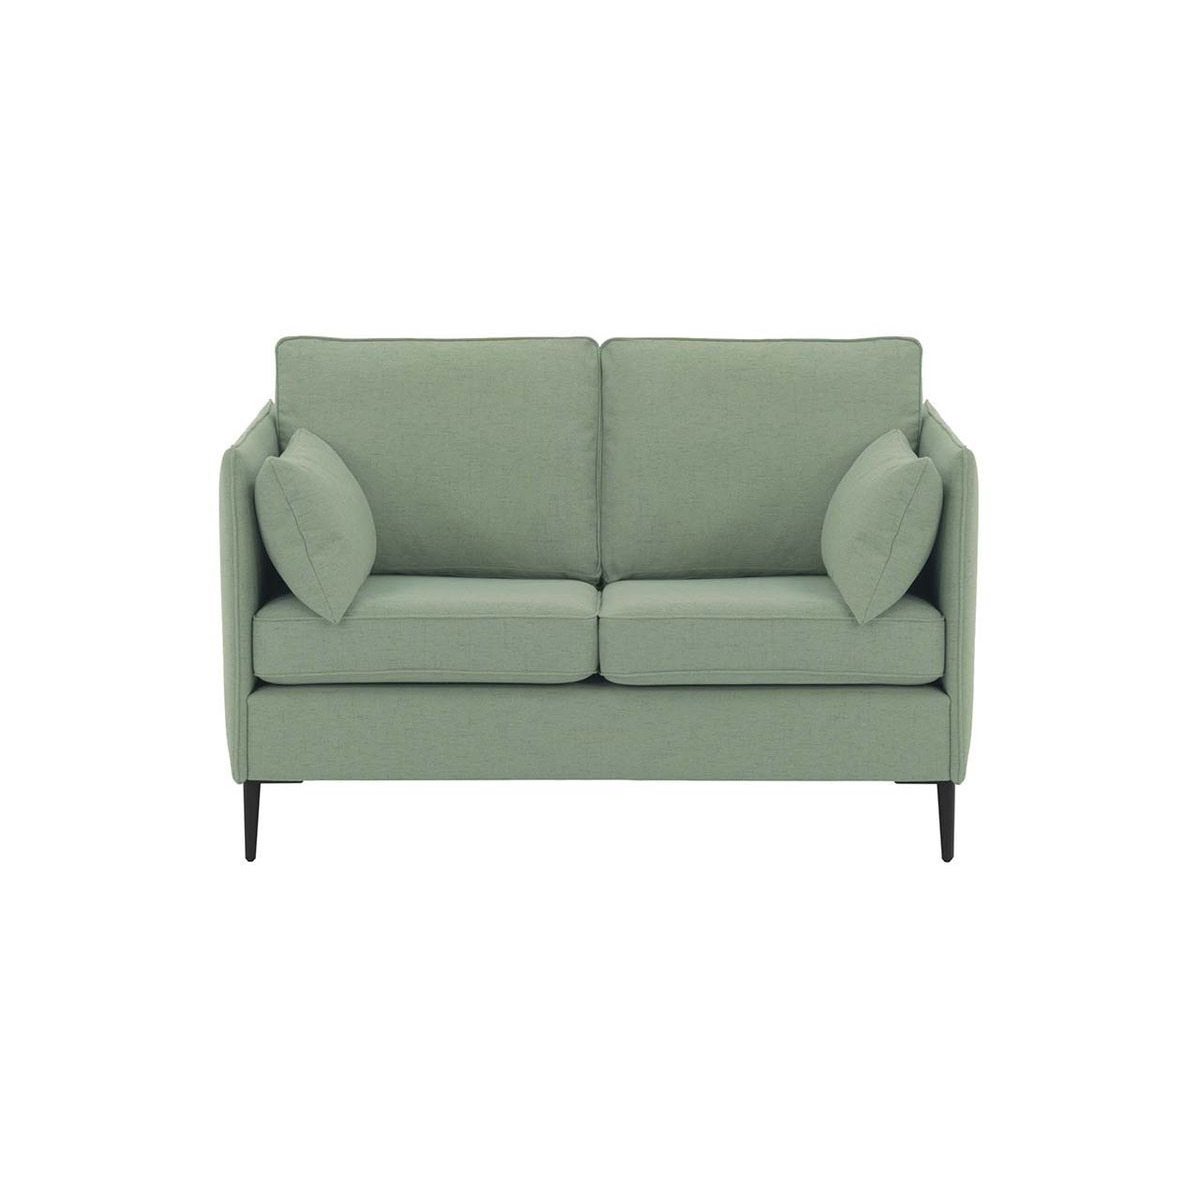 Tasna 2 Seater Sofa, pastel blue - image 1